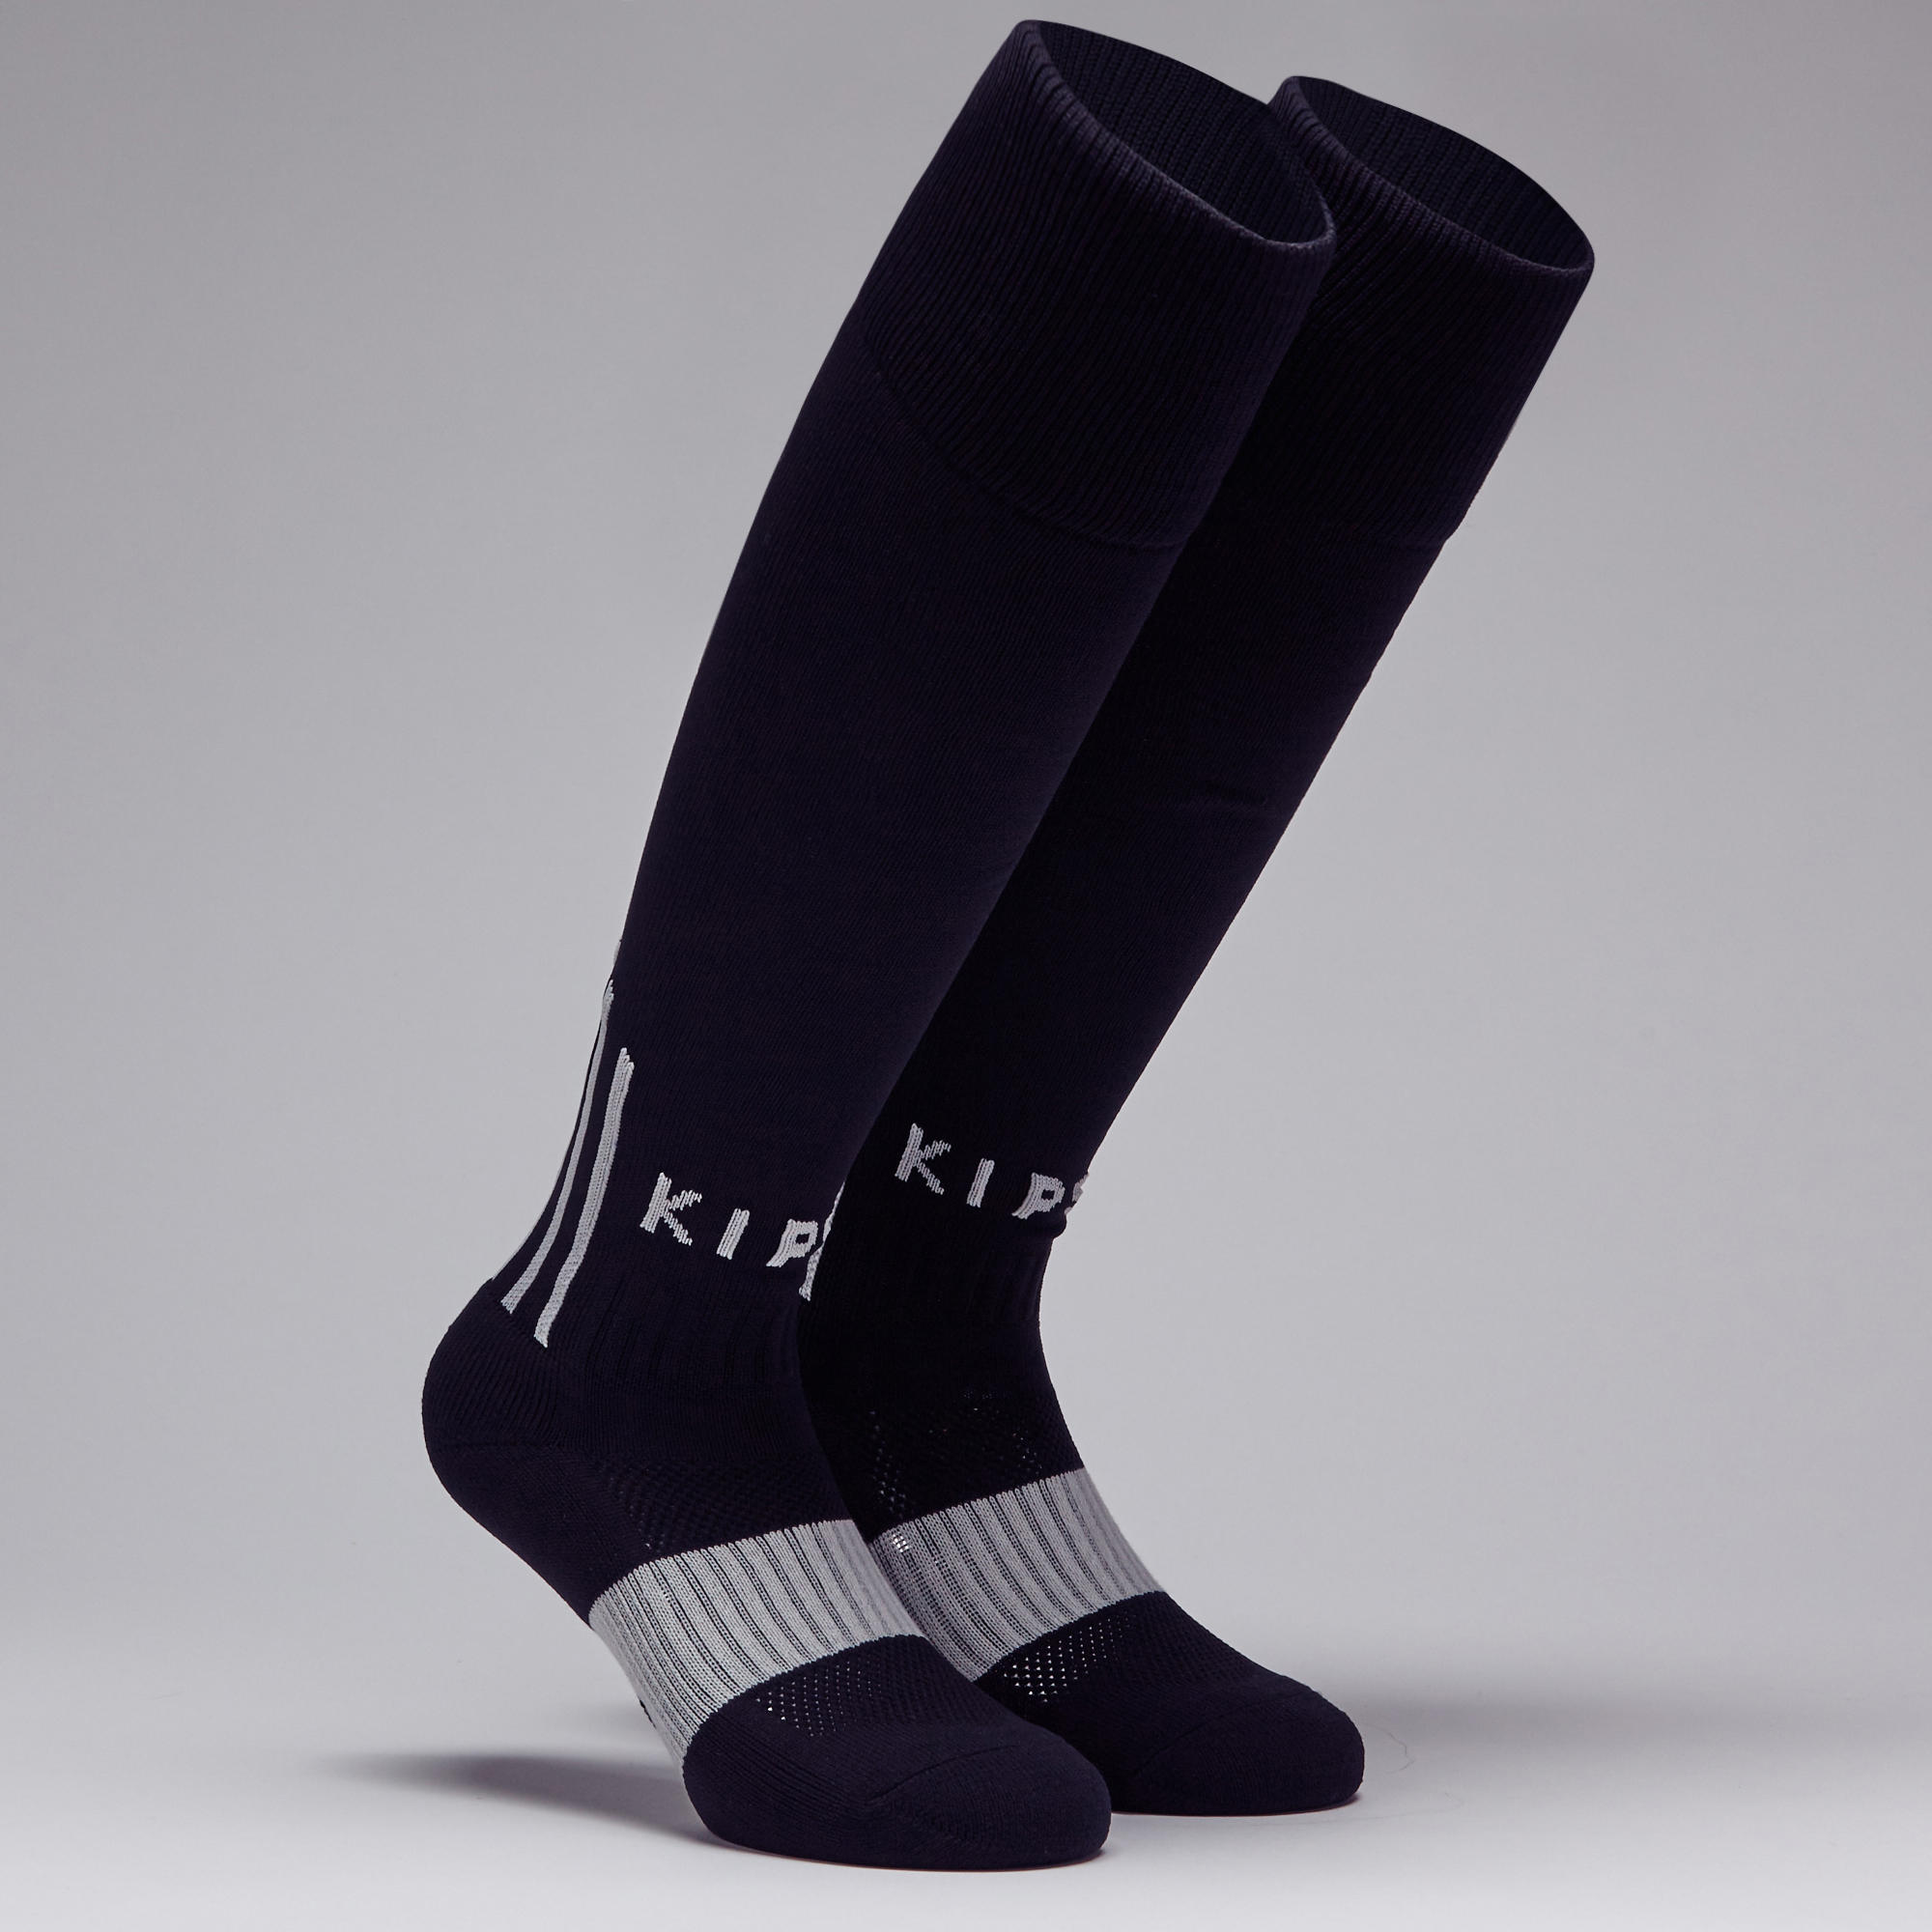 F500 Soccer Socks Black - Black, Abyss grey - Kipsta - Decathlon